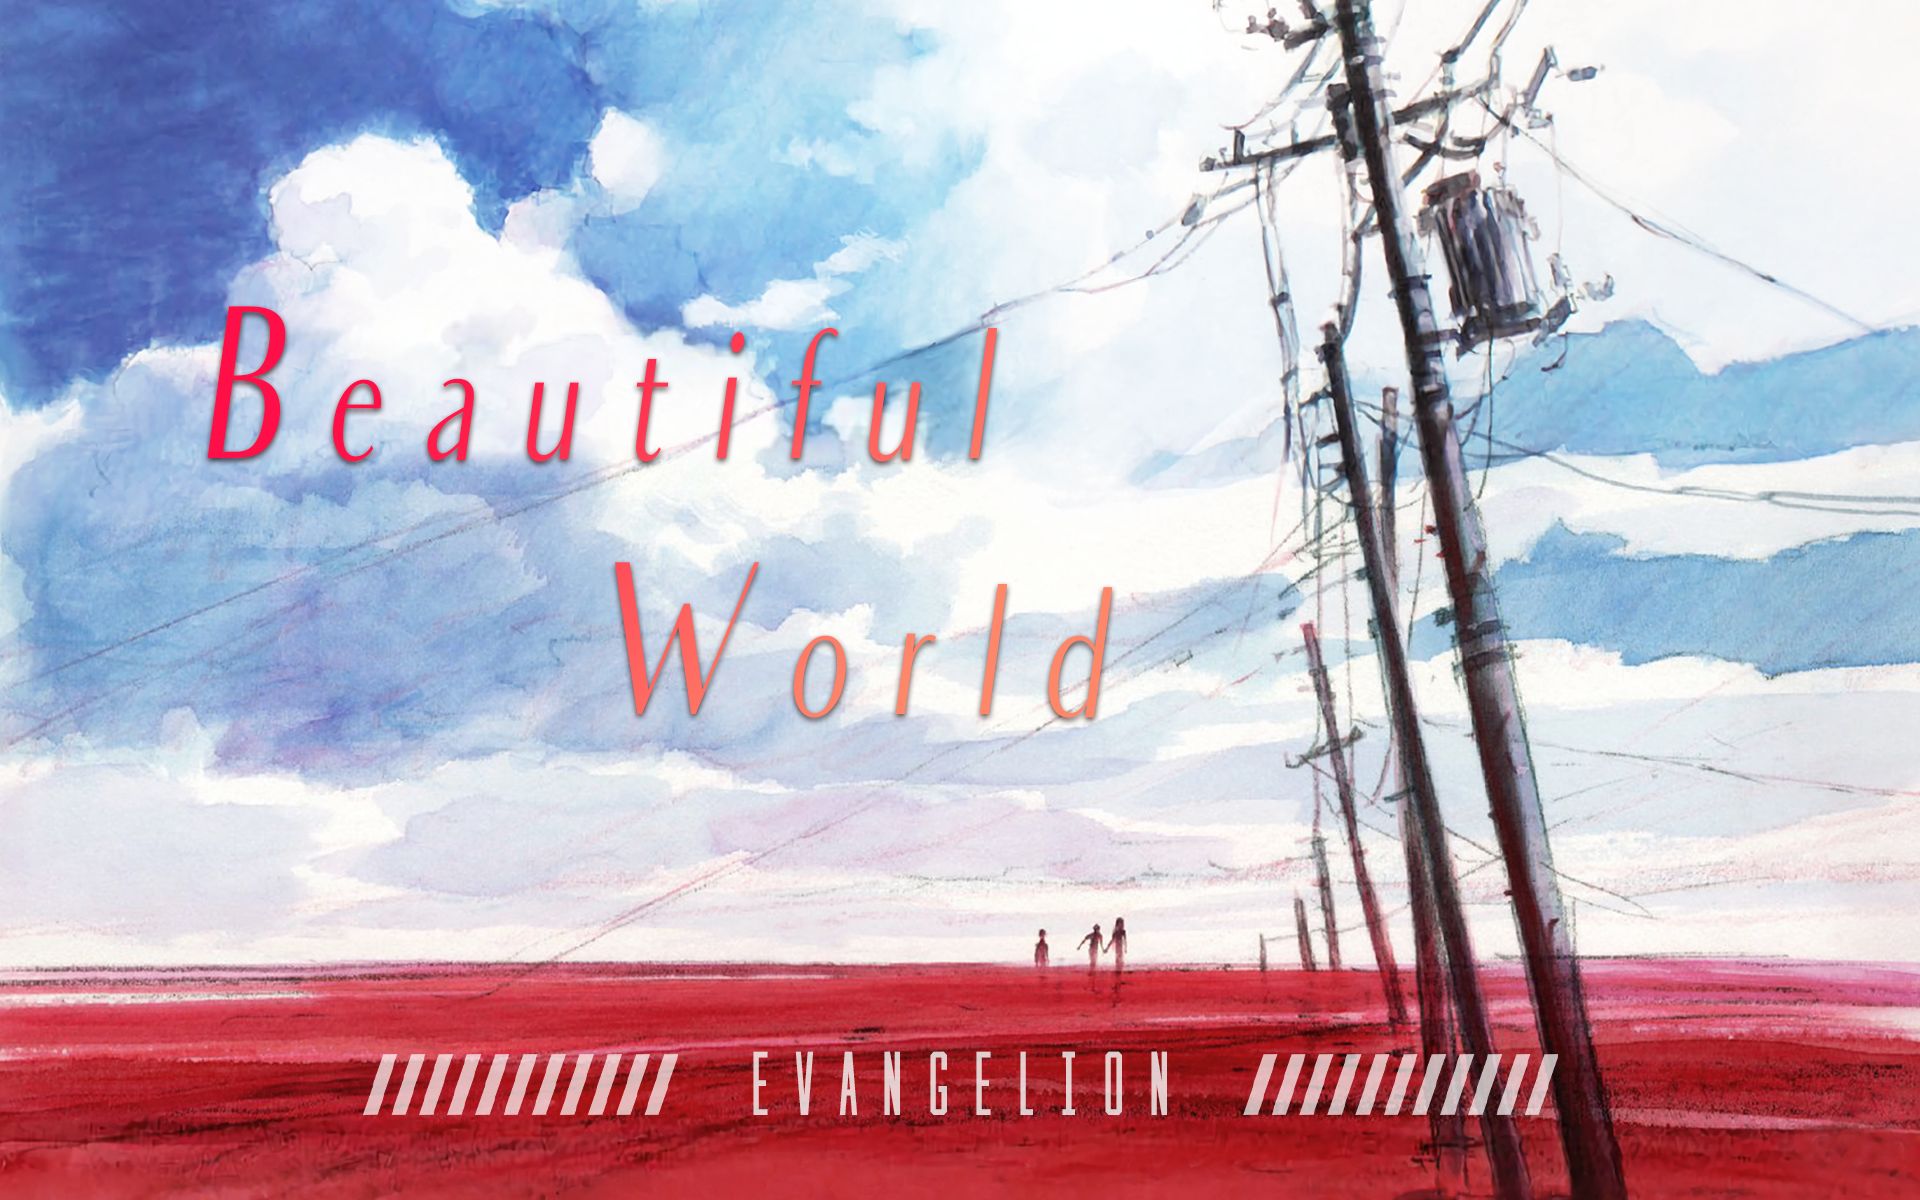 【EVA】终结亦是起始:│▌ Beautiful World